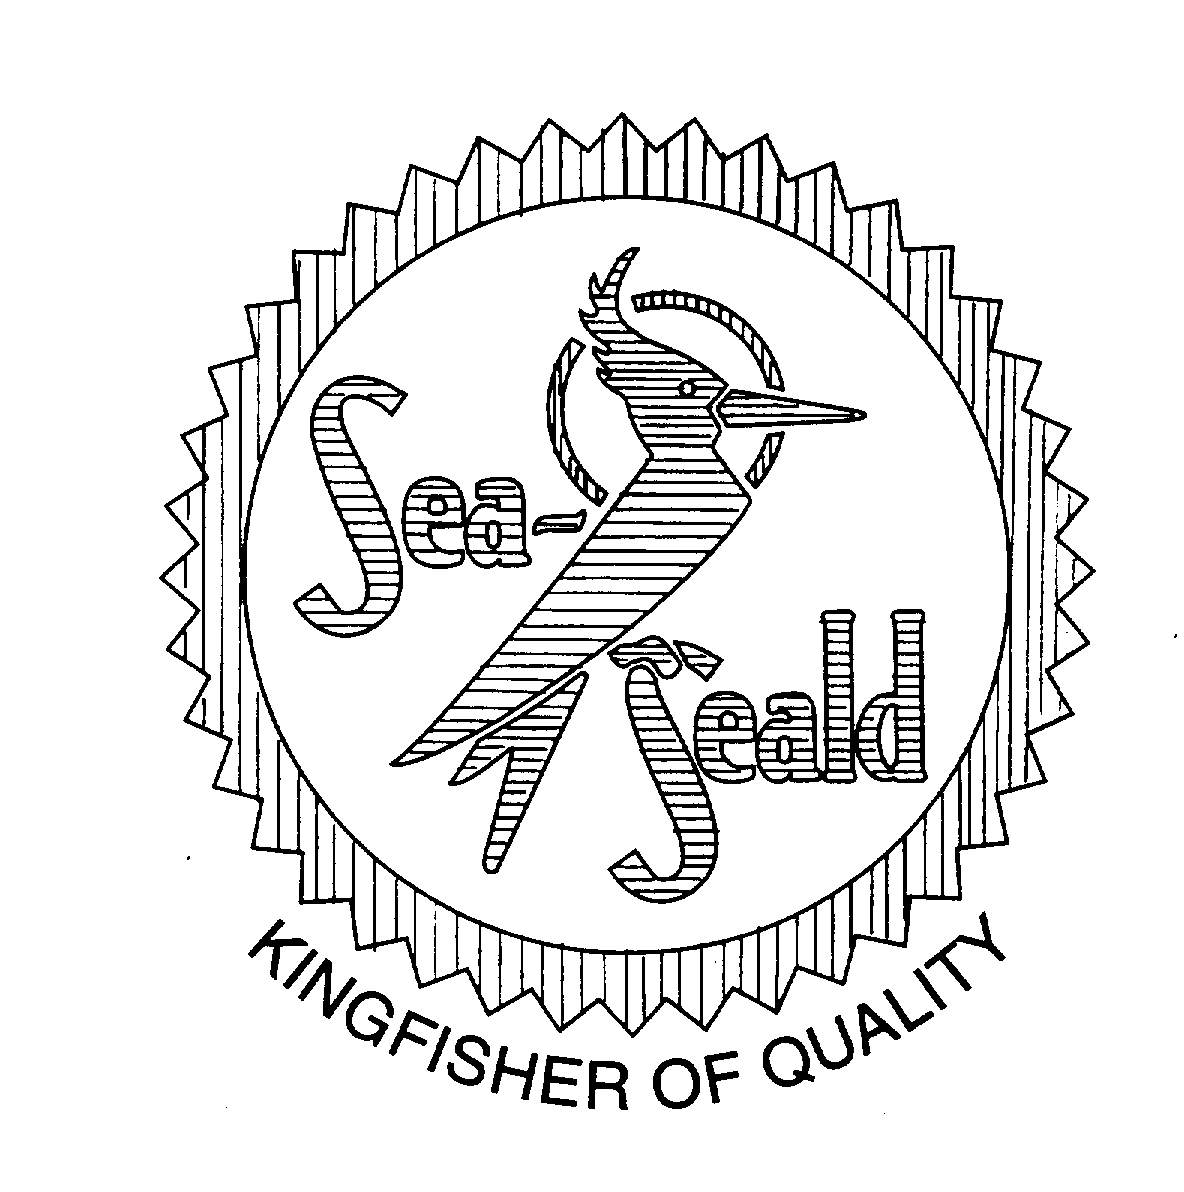  SEA-SEALD KINGFISHER OF QUALITY